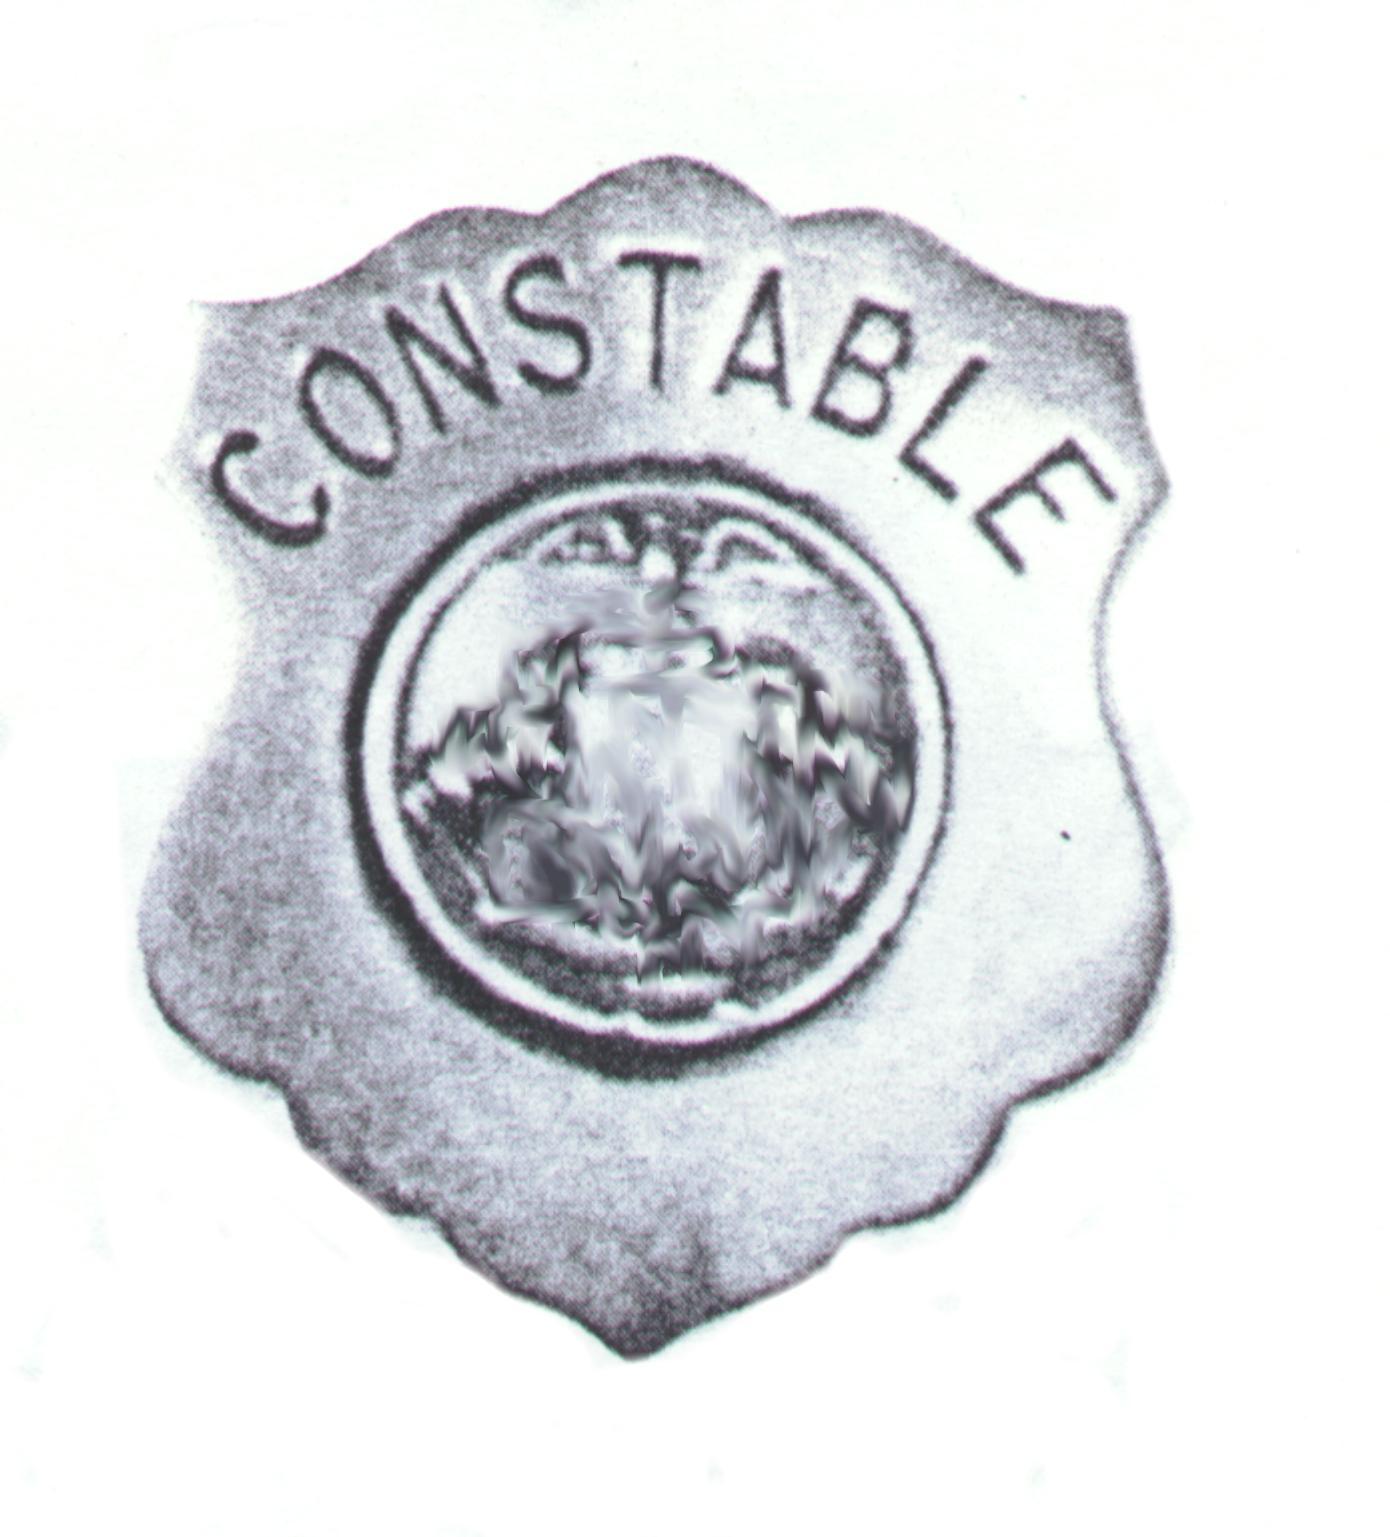 Deputy Constable Richard L. Ryan of Ophir City Police Department